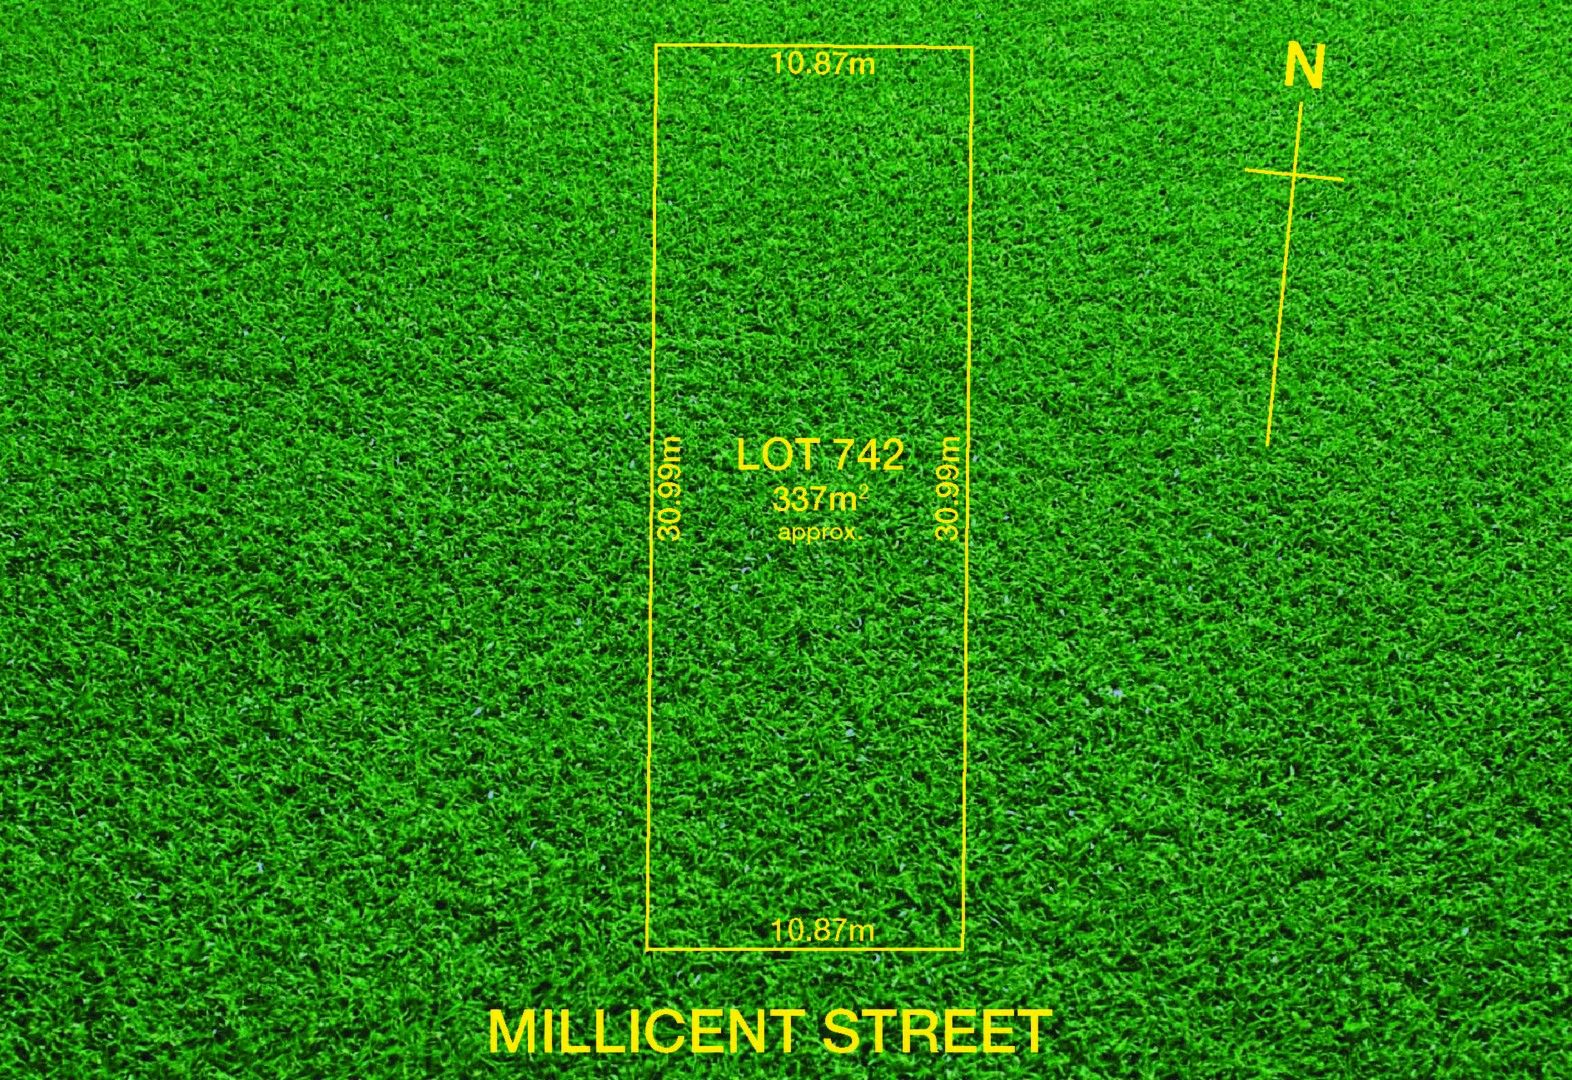 Lot 742/53 Millicent Street, Athol Park SA 5012, Image 0